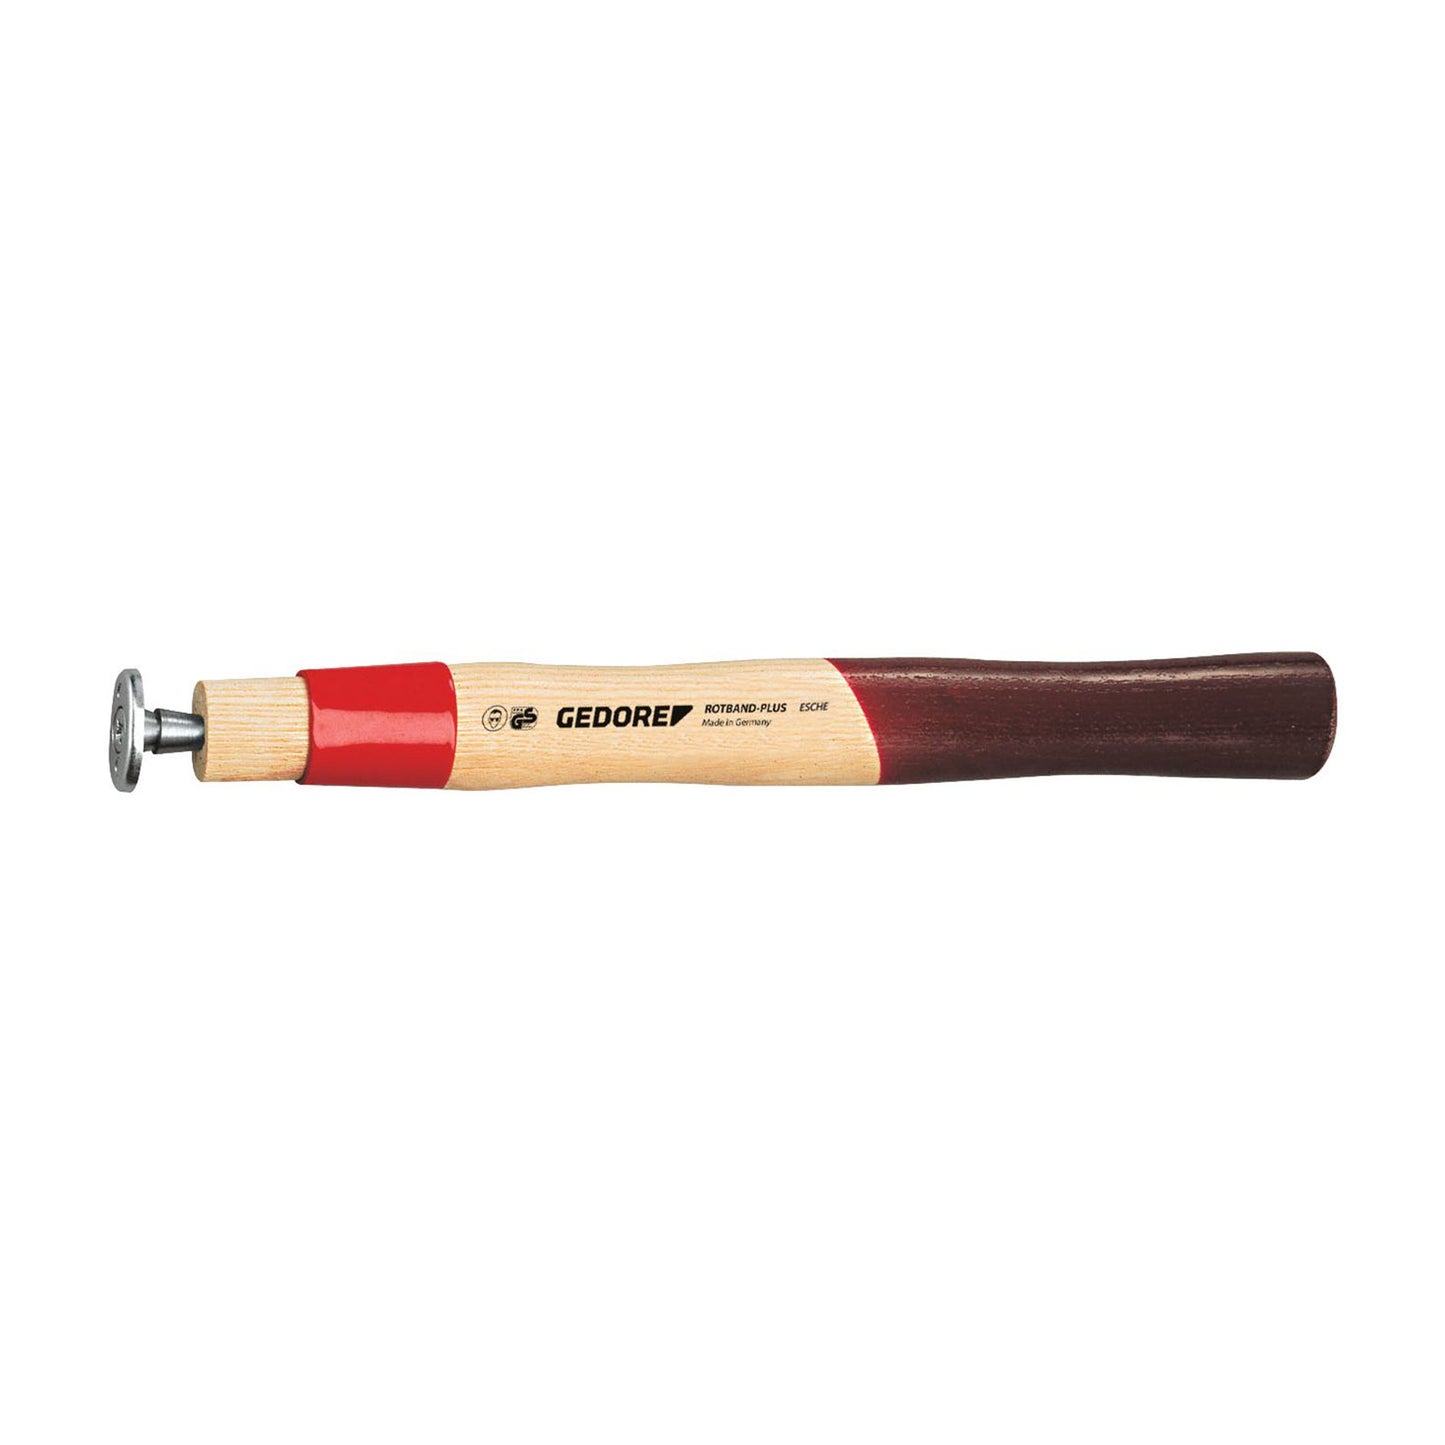 GEDORE E-620 H-1250 - ROTBAND walnut handle 26cm (8749730)